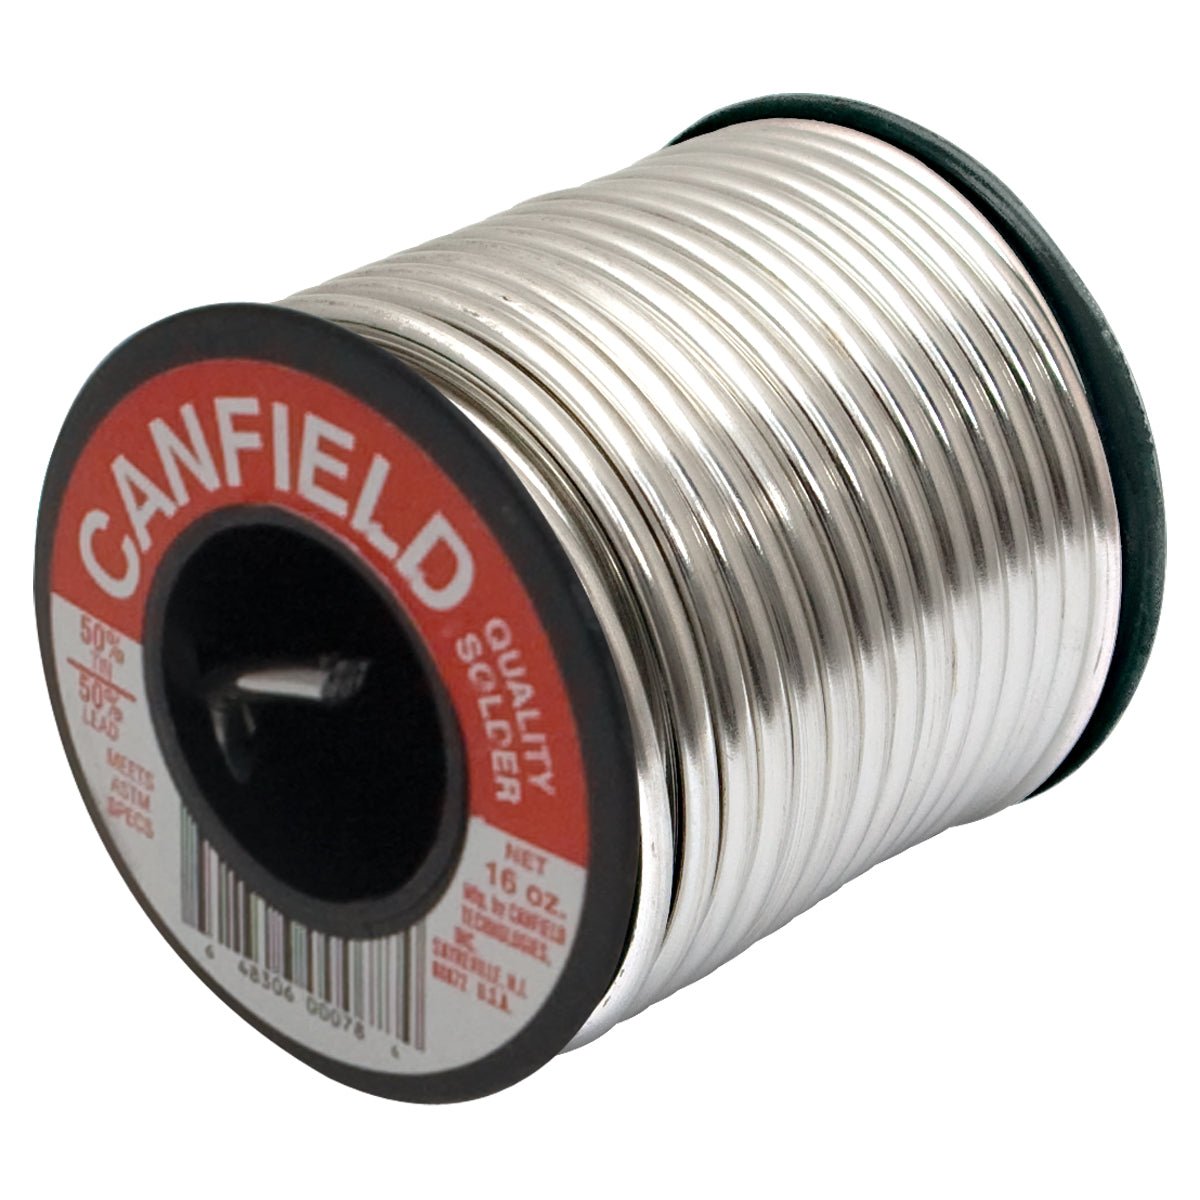 Canfields Lot – 1 Pfund. Spule – 50/50 Draht